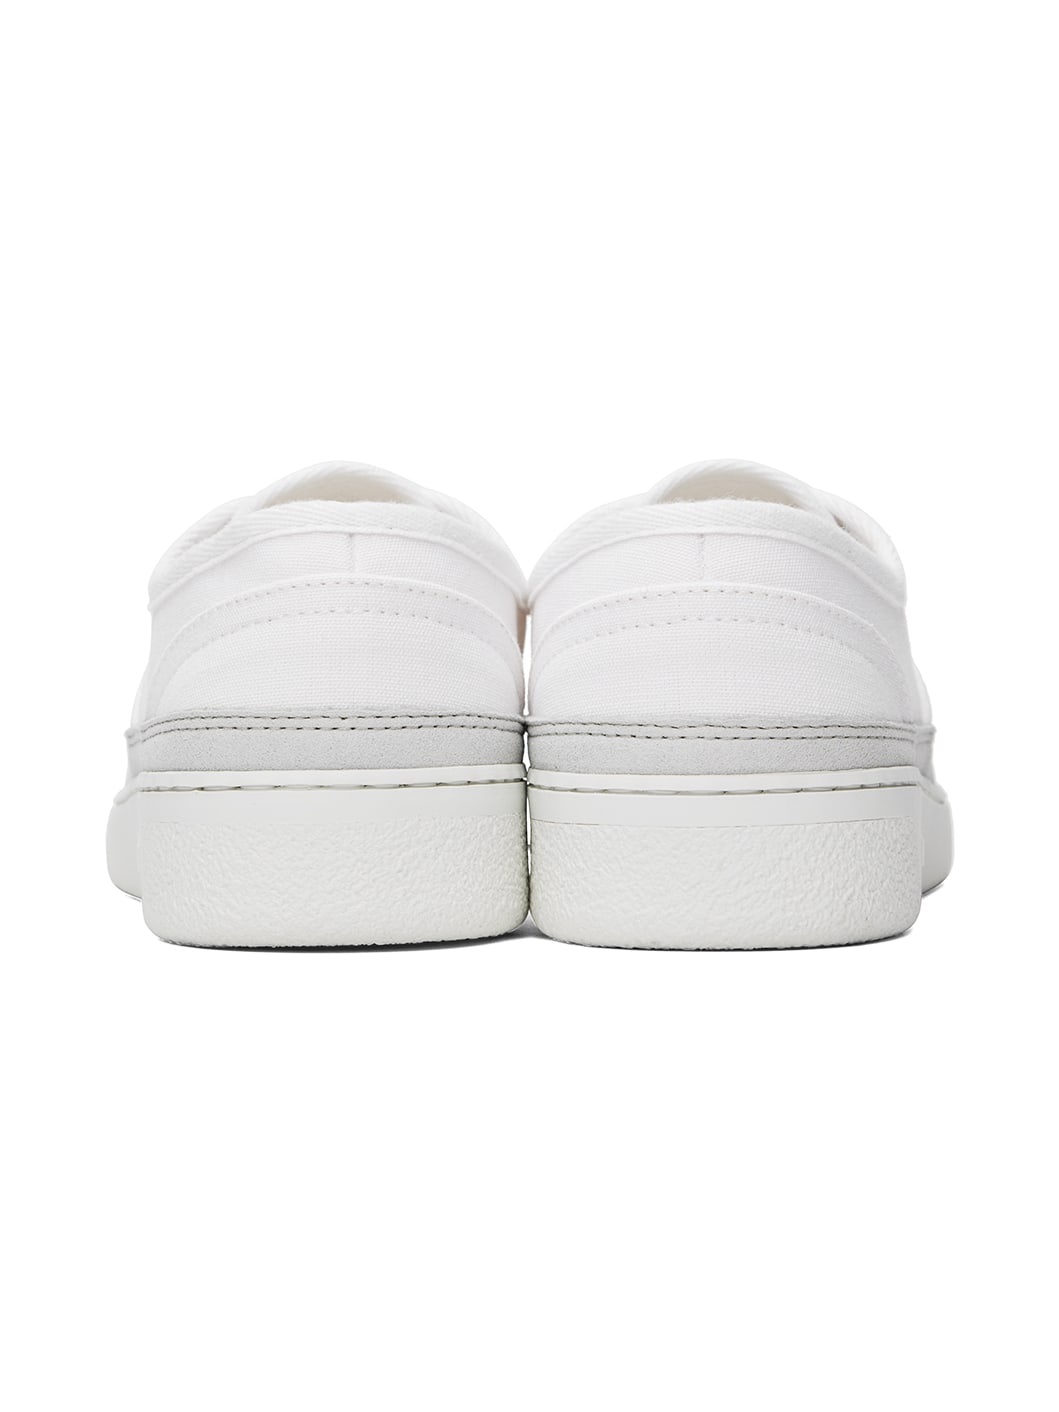 White Plain Simple Sneakers - 2